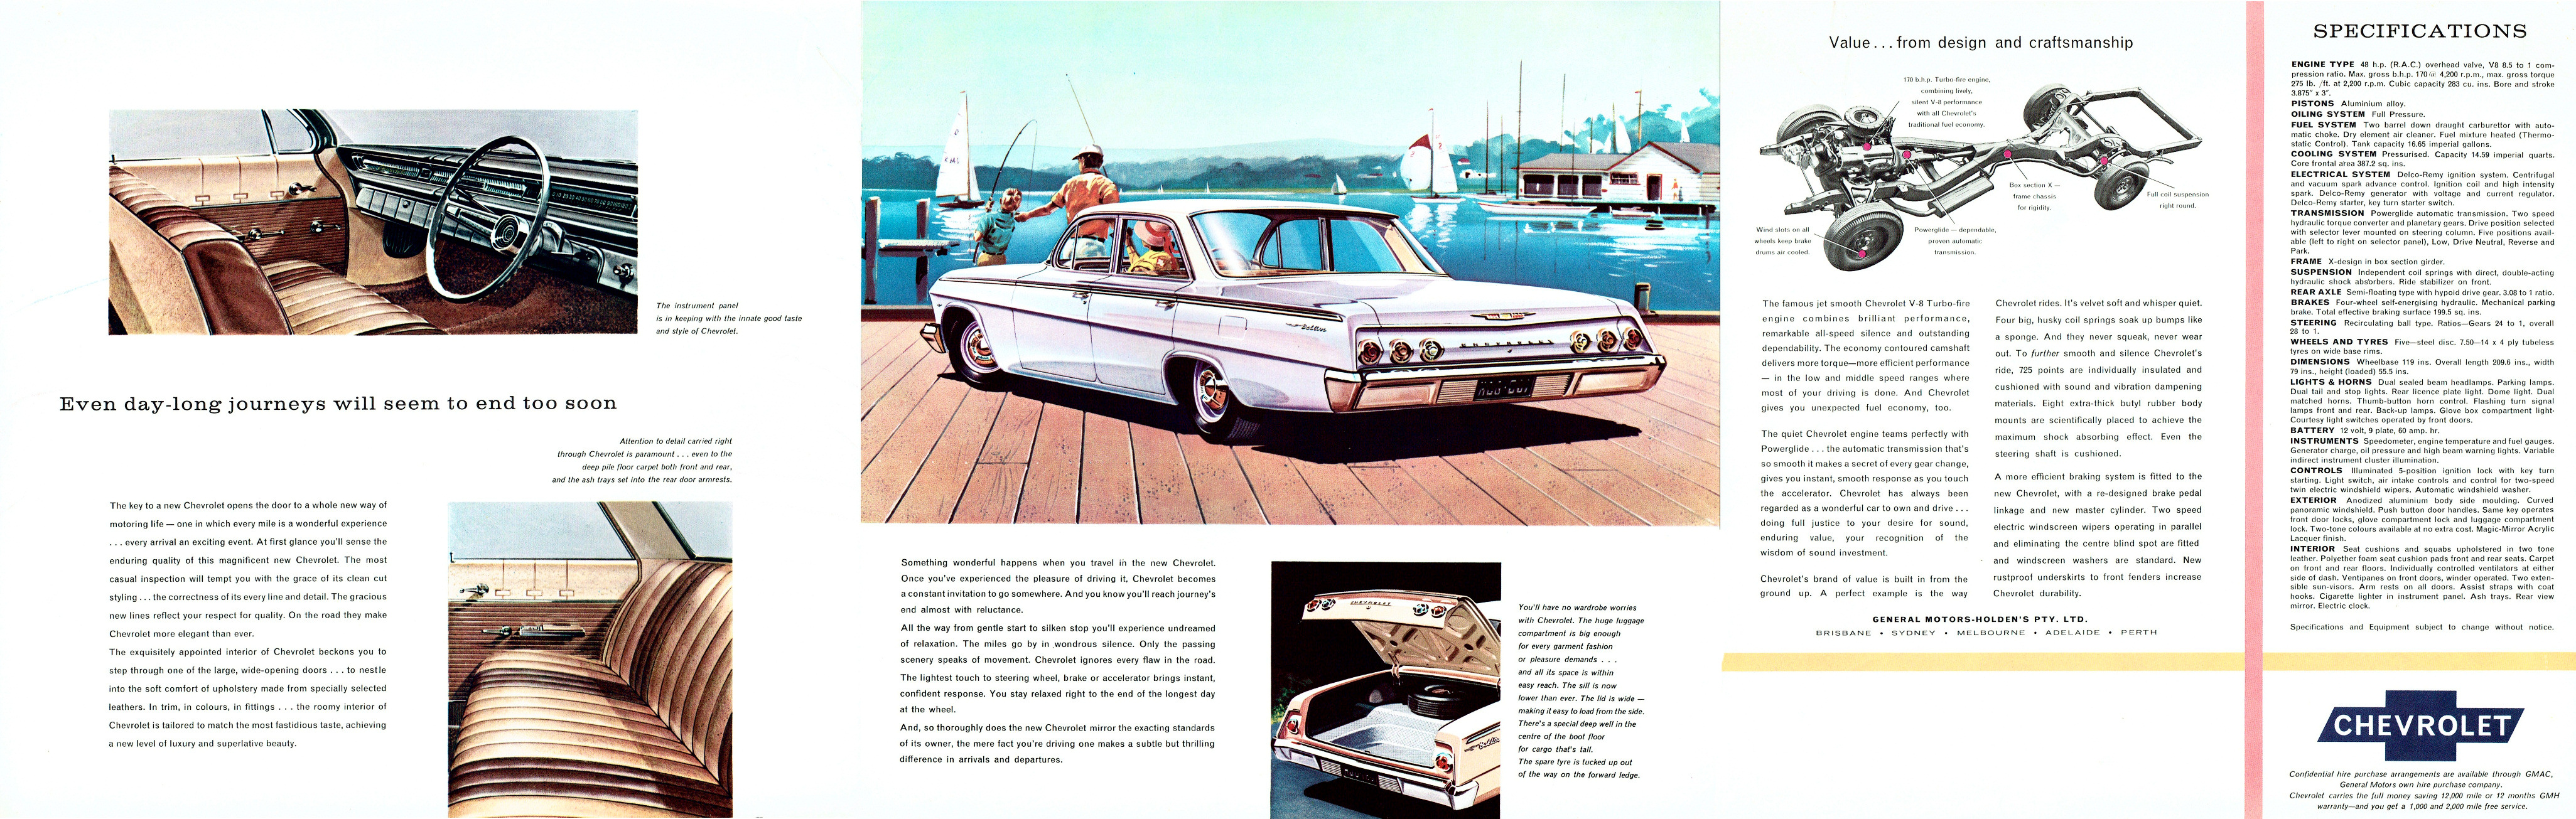 1962_Chevrolet_Aus-Side-B